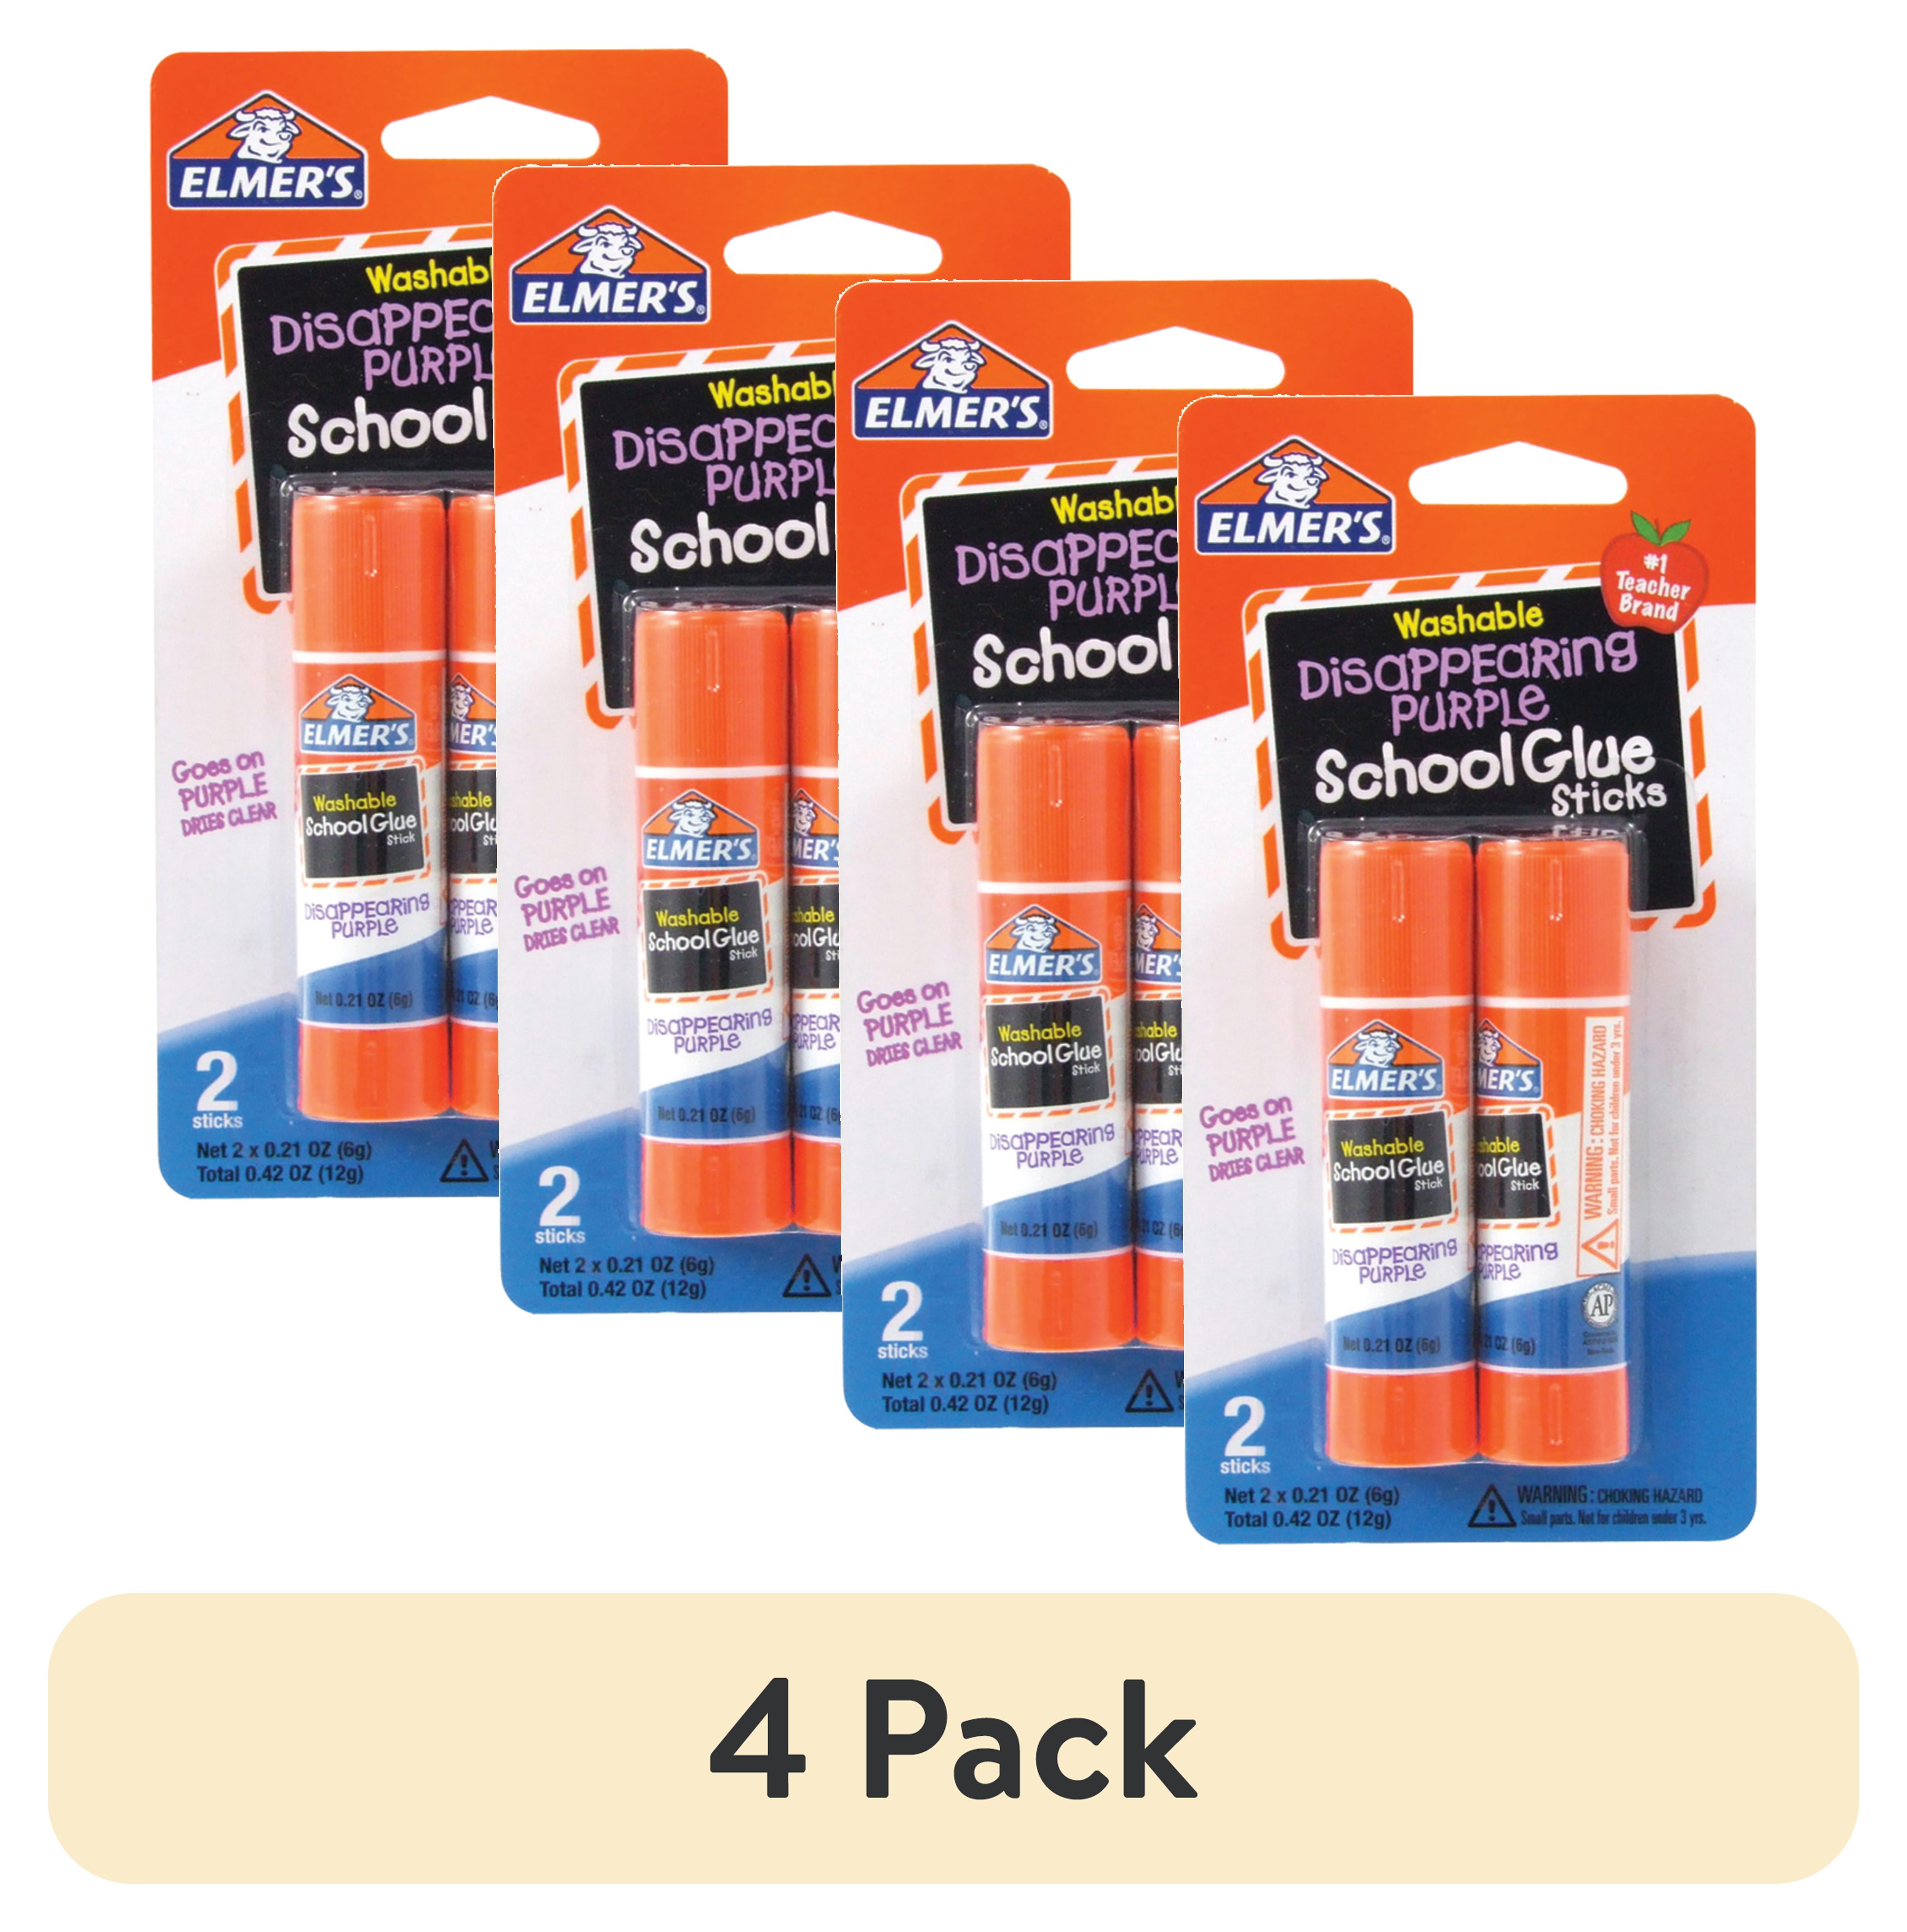 Elmer's Disappearing Purple School Glue Sticks - 12 pack